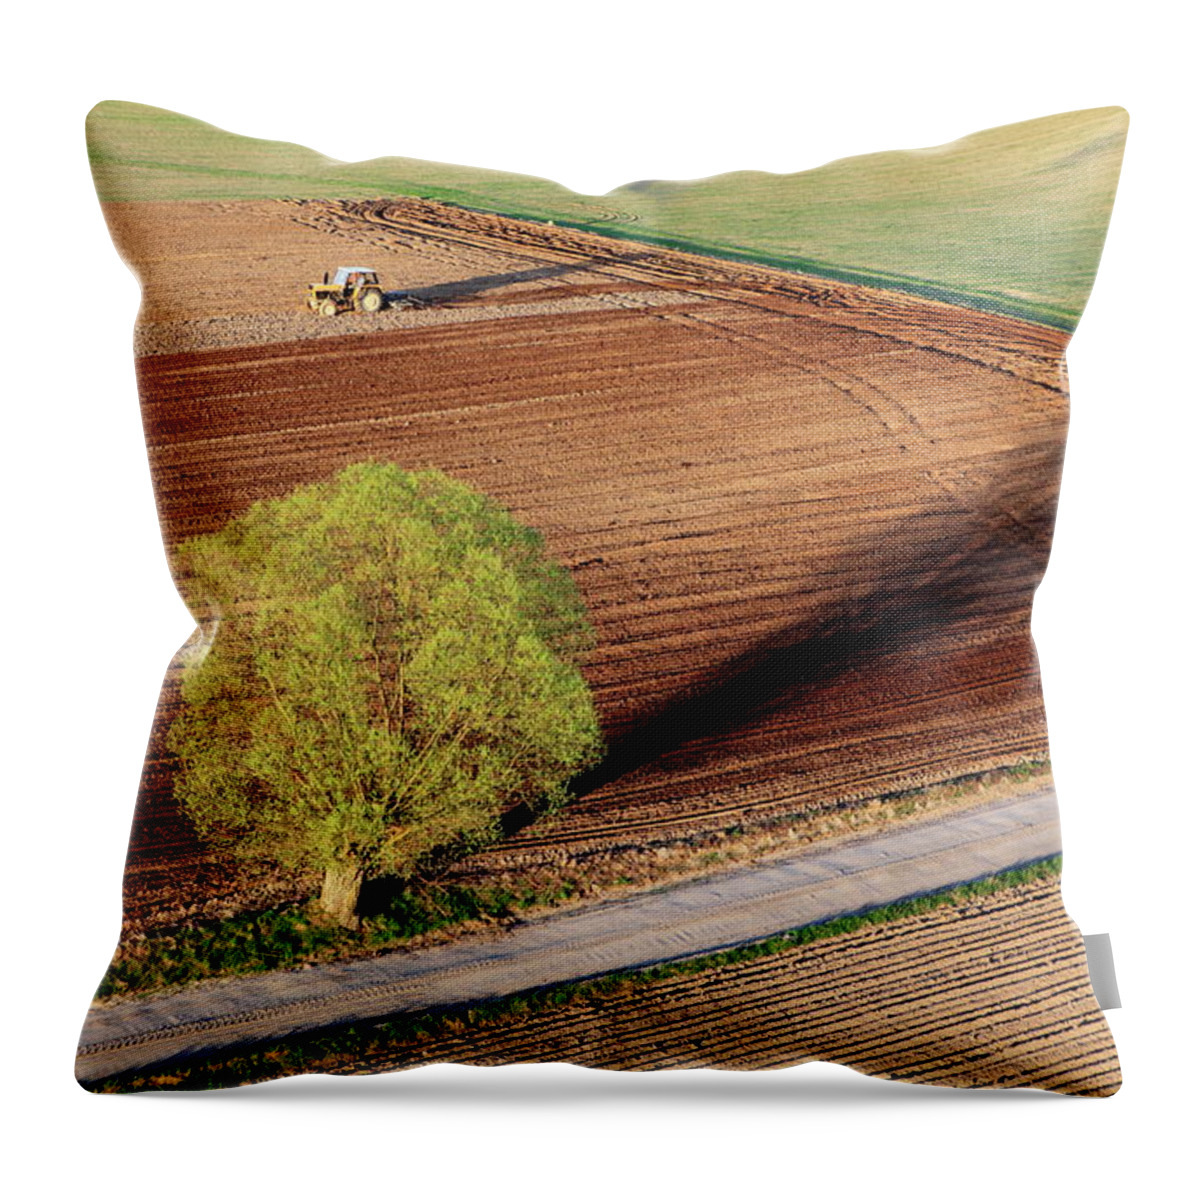 Grass Throw Pillow featuring the photograph Aerial Photo Of Farmland by Dariuszpa